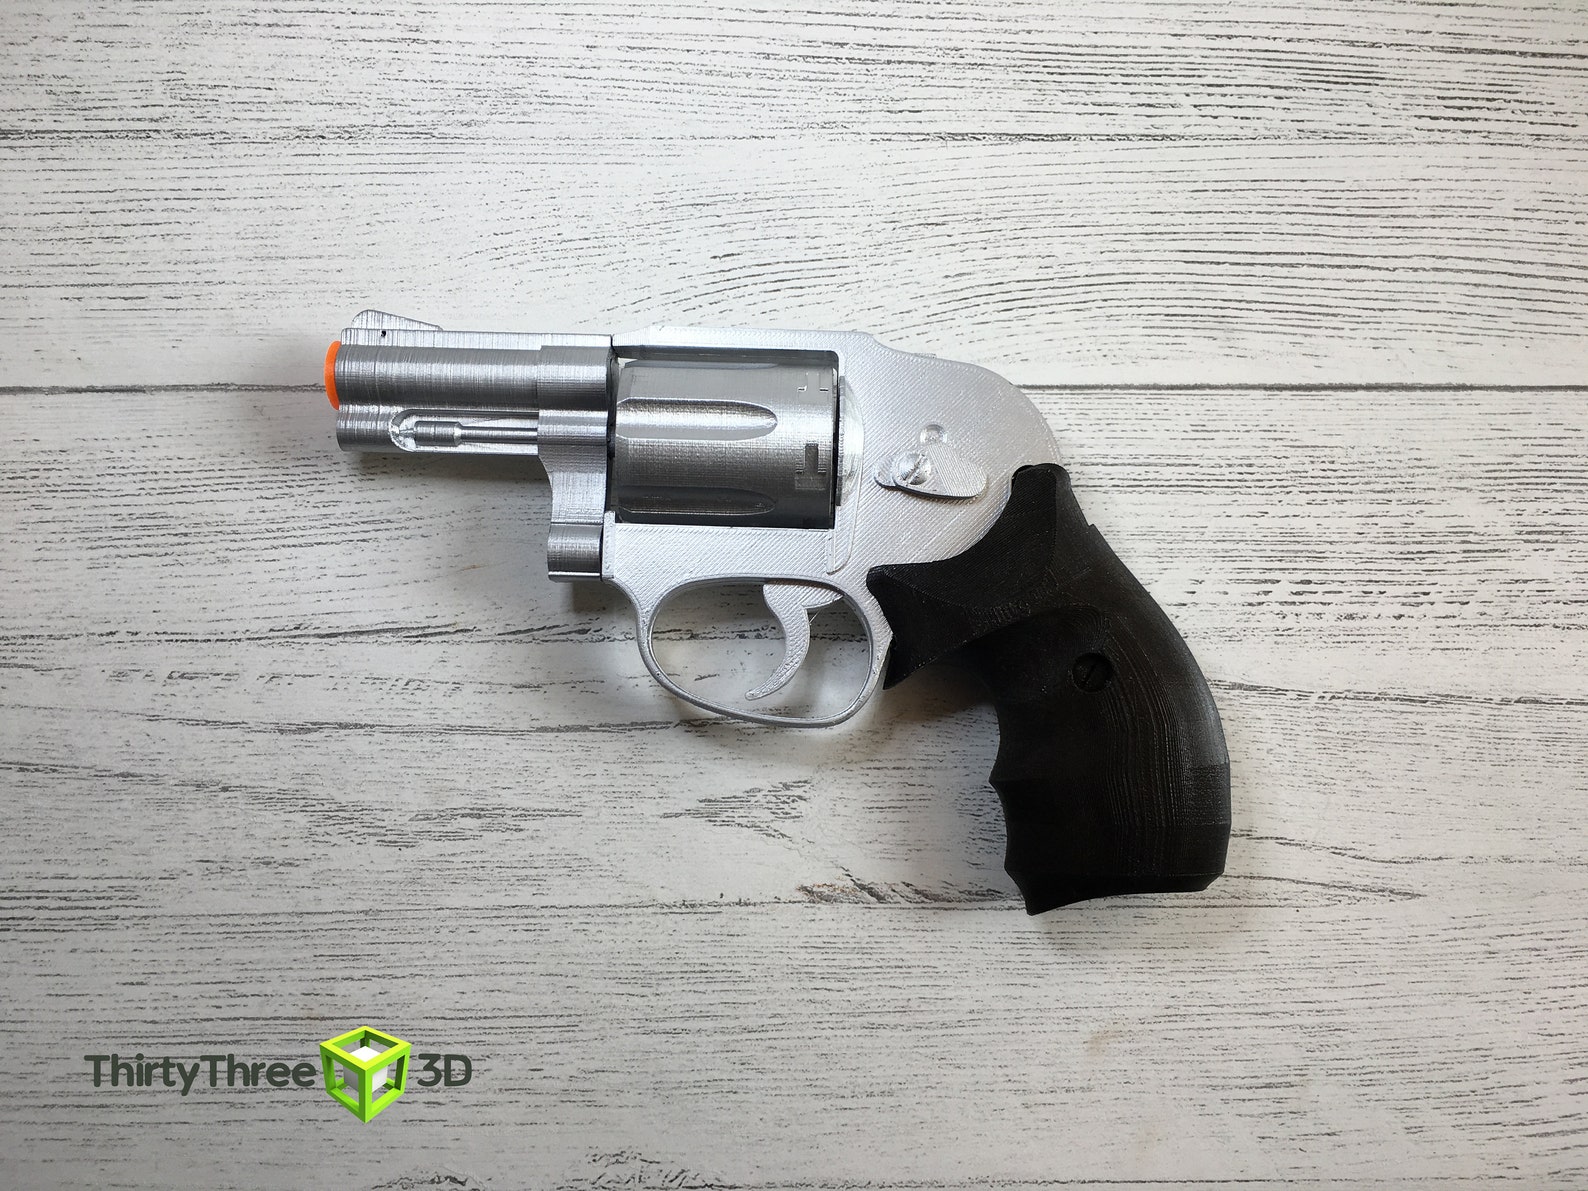 Револьвер 03. Smith Wesson 649. Маленький револьвер 3д,Пег. Револьвер в три четверти. S&W 649 купить.